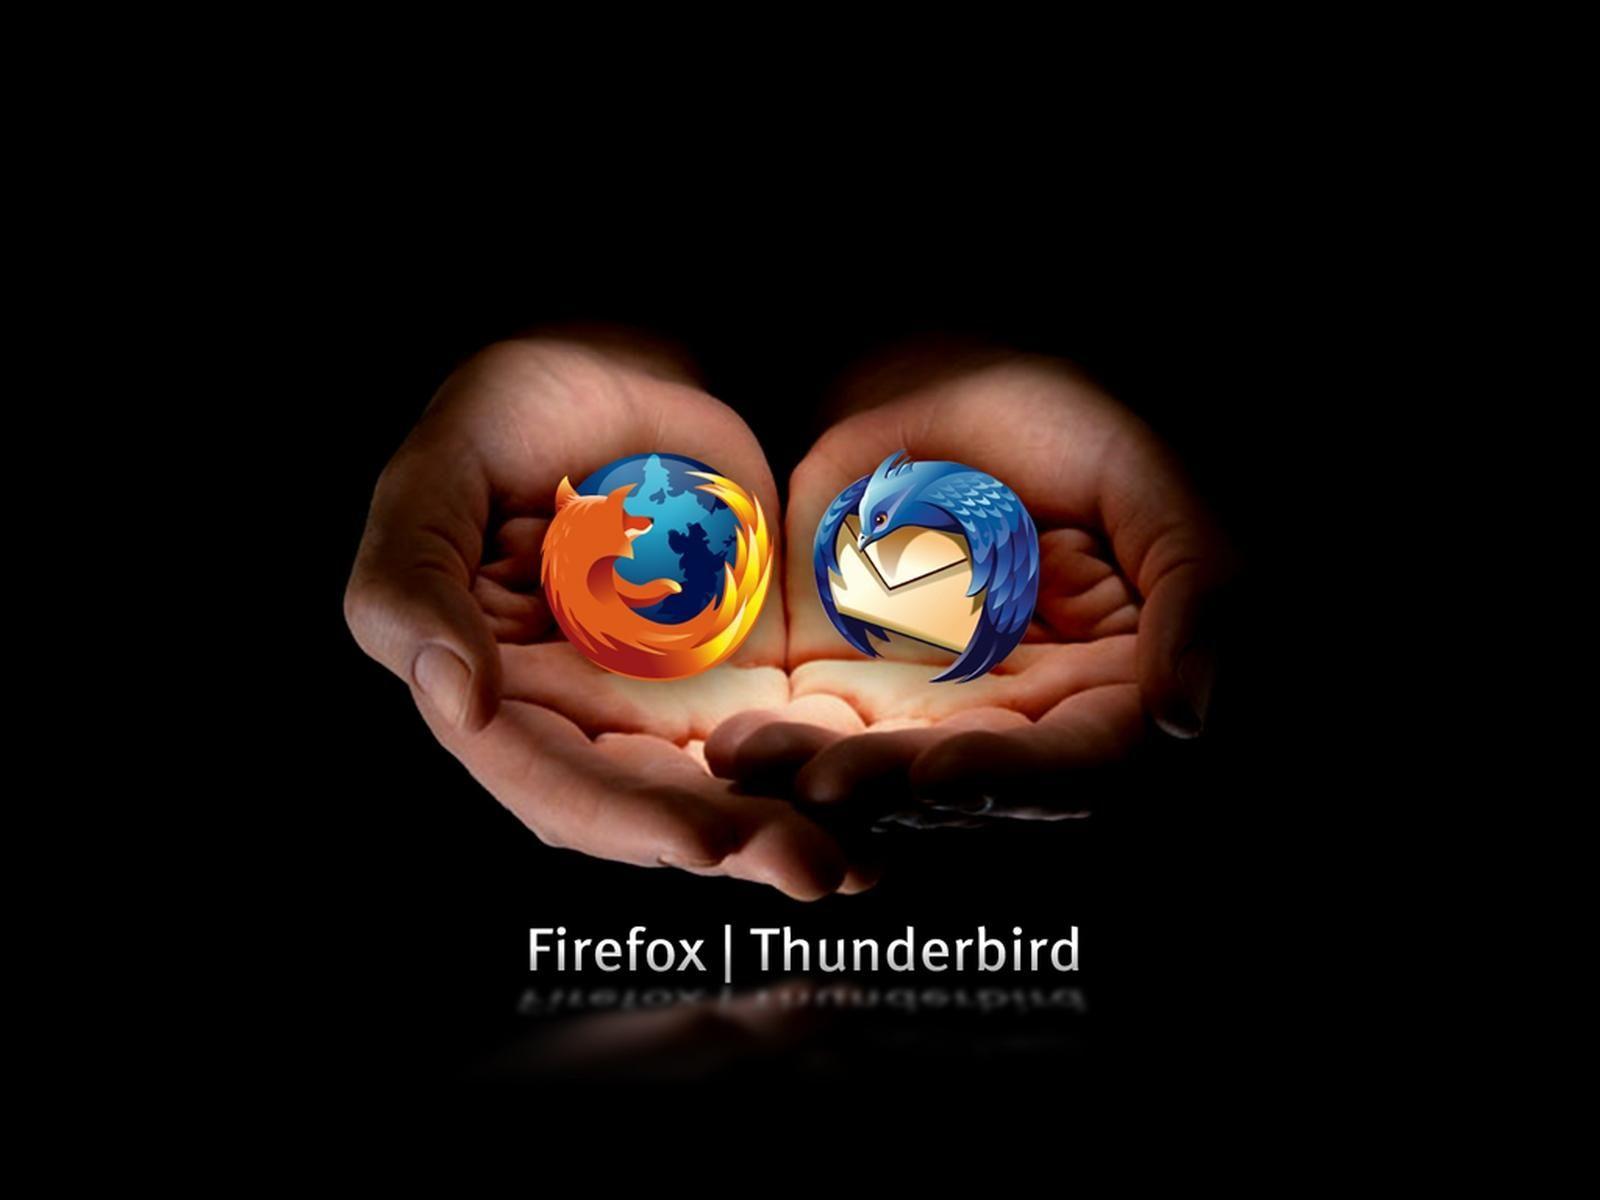 Technology Mozilla Firefox Art wallpaper Desktop, Phone, Tablet